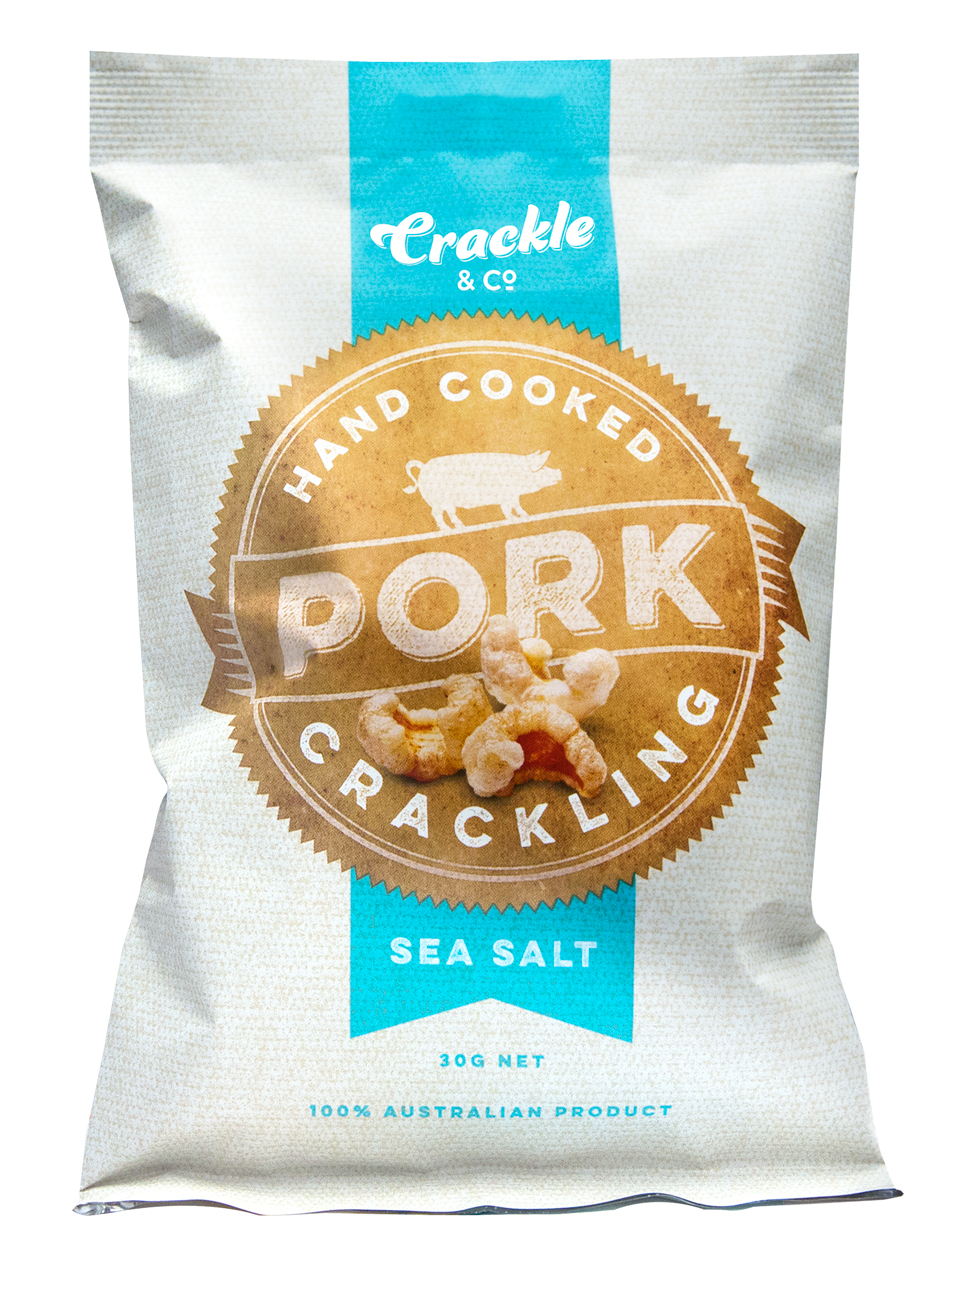 Crackling-Co-sea-salt.jpg